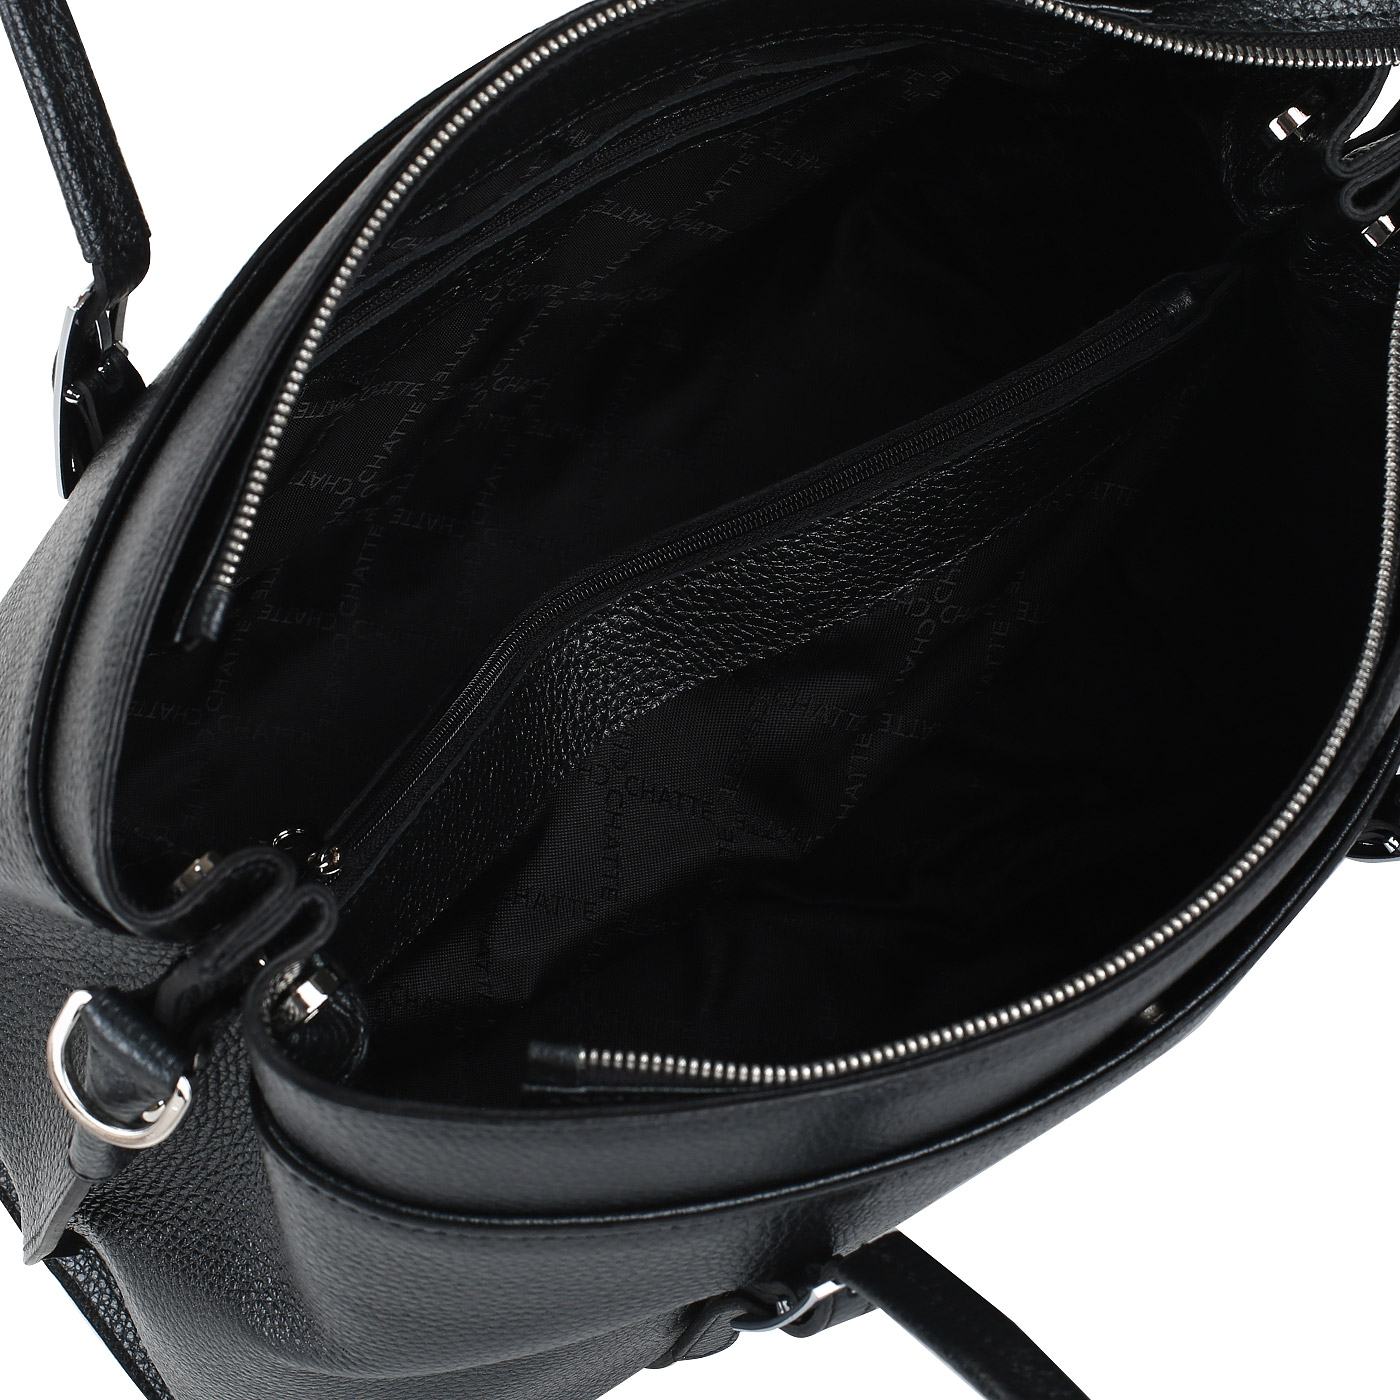 Черная кожаная сумка Chatte 